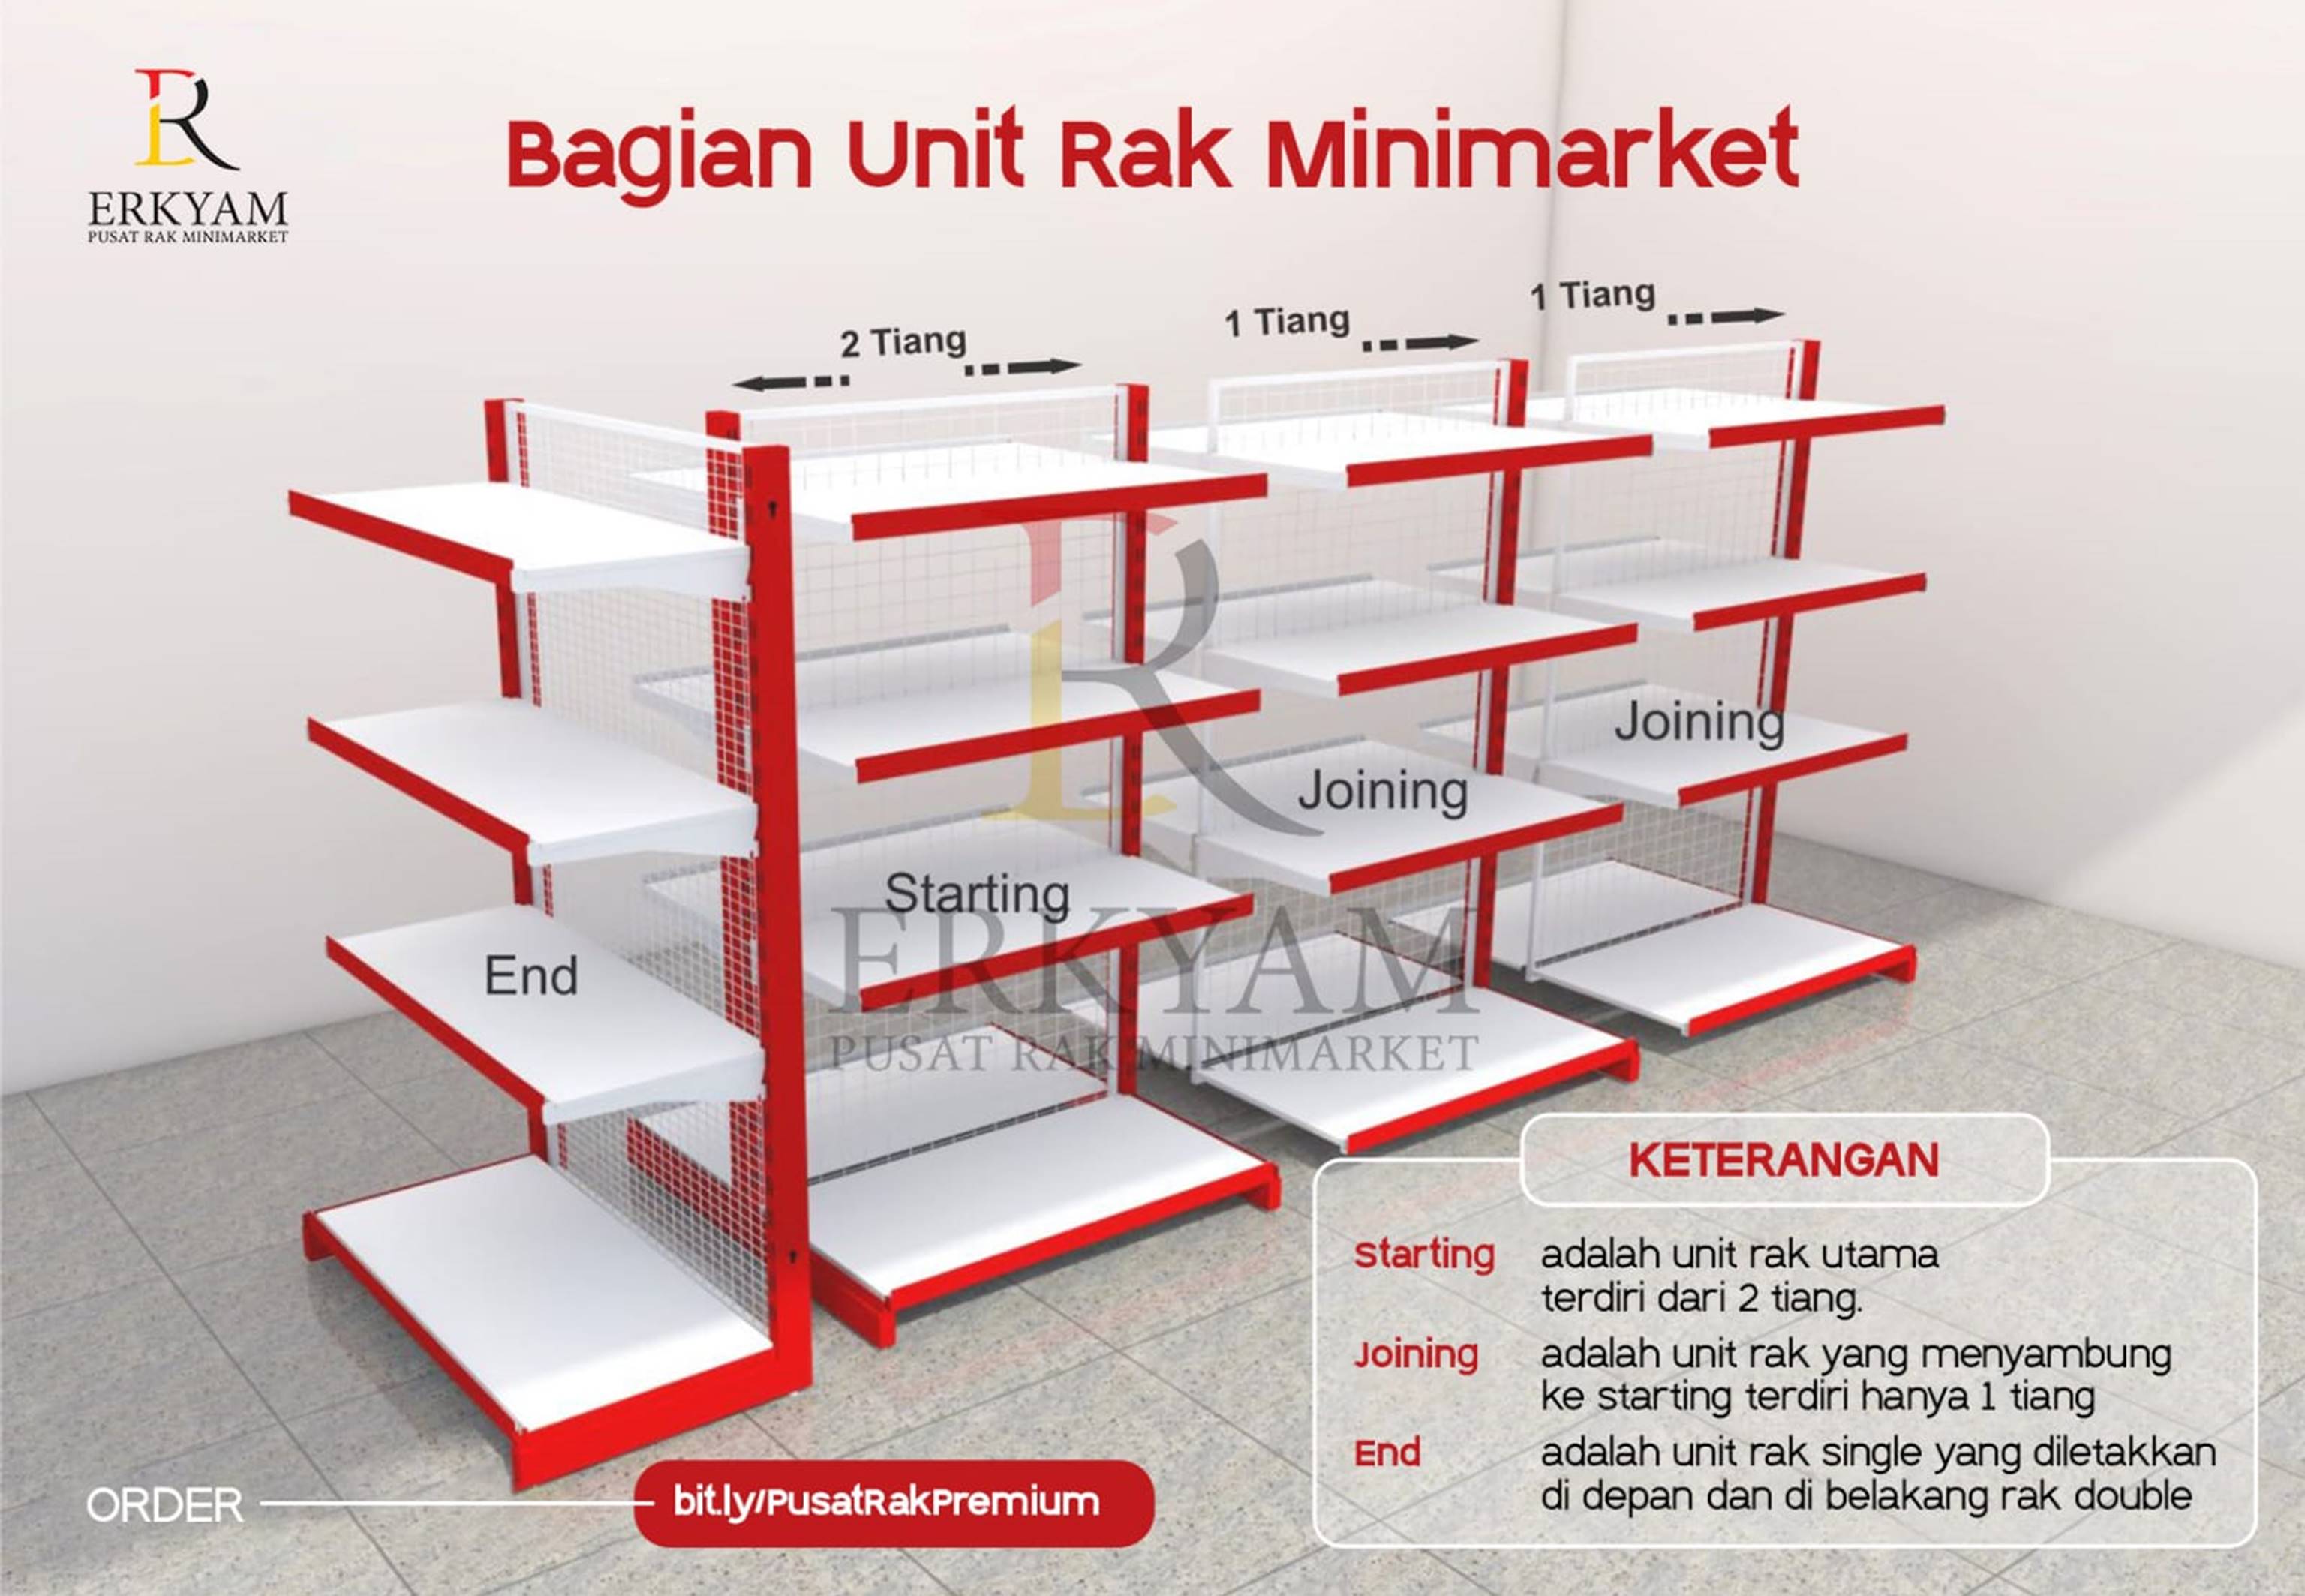 ERKYAM Supplier Rak Minimarket area Mamuju Tengah Sulawesi Barat